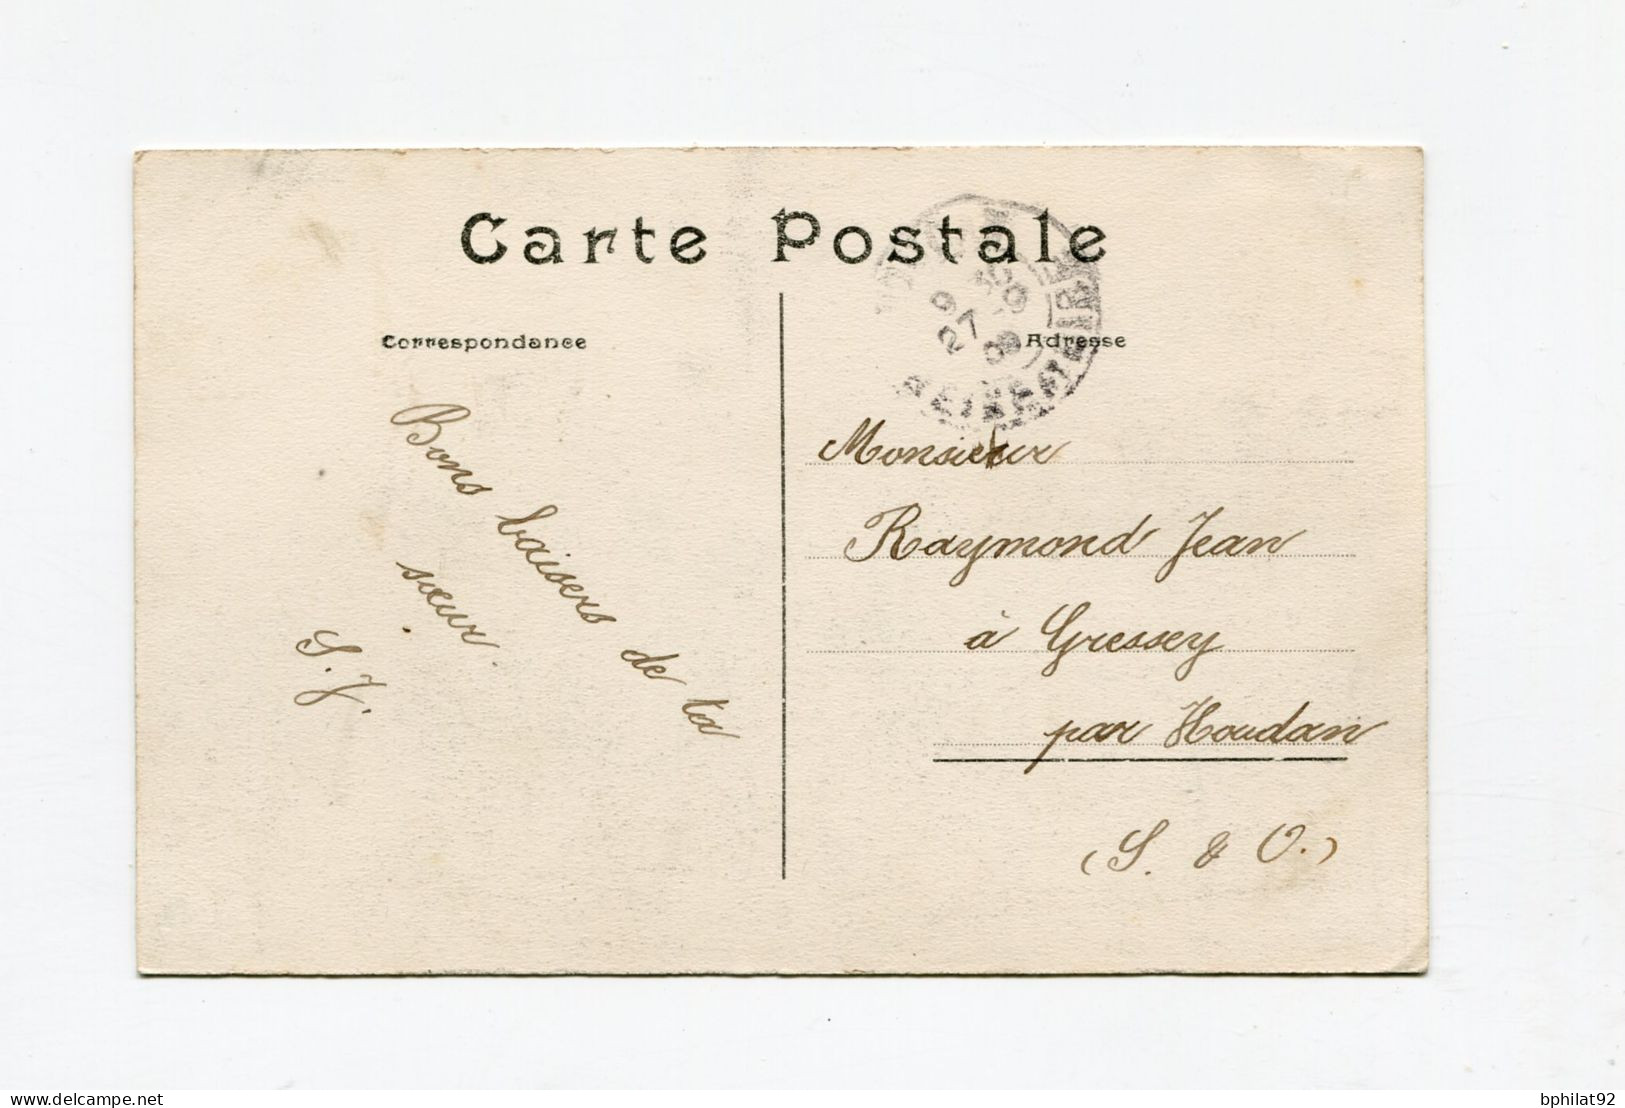 !!! CPA DE L'INAUGURATION DE L'AERODROME DE JUVISY DE 1909 AVEC PORTE TIMBRE DE PORT-AVIATION - Covers & Documents